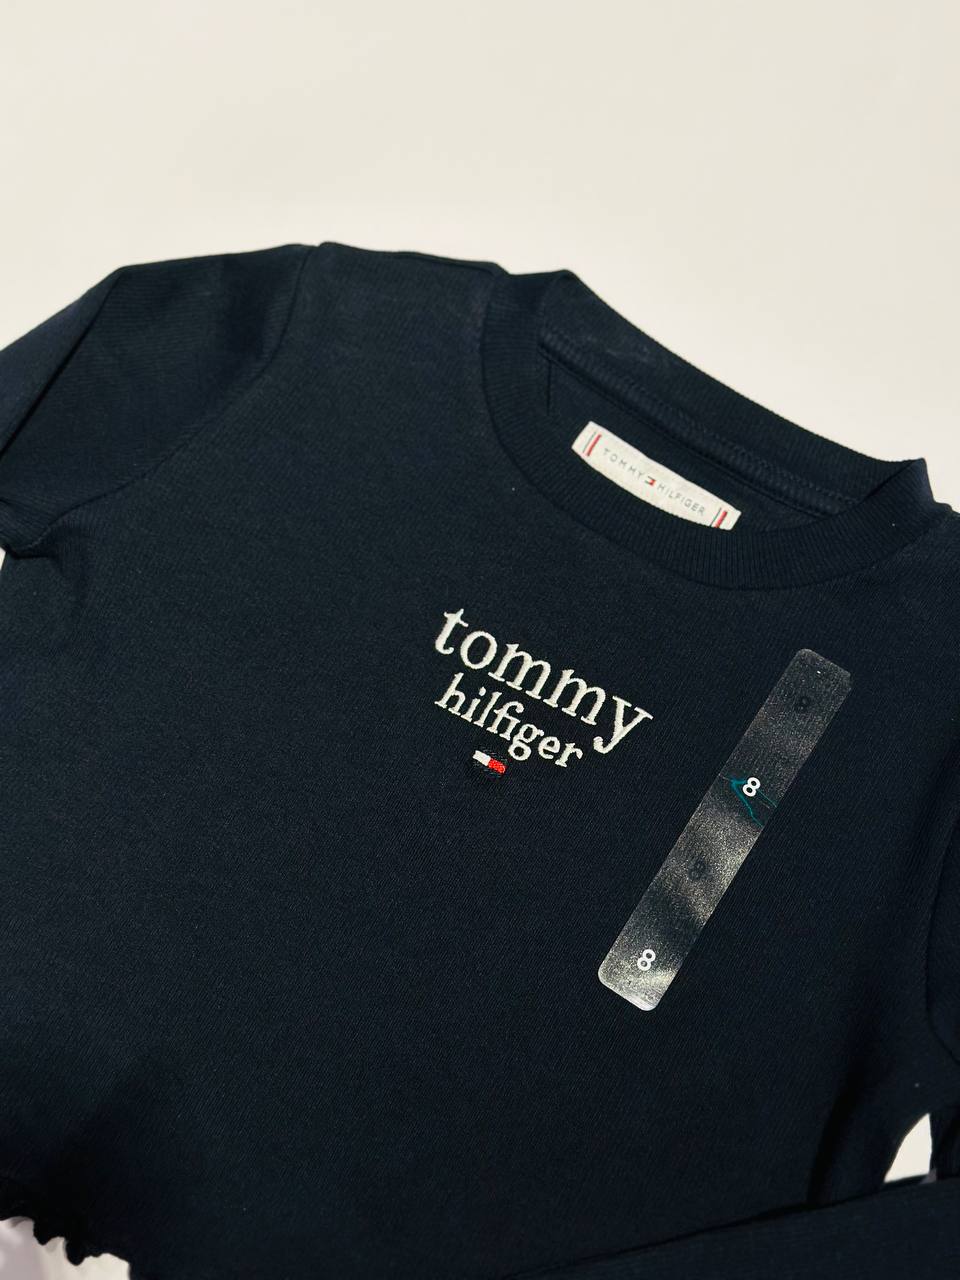 Tommy Hilfiger kids shirt